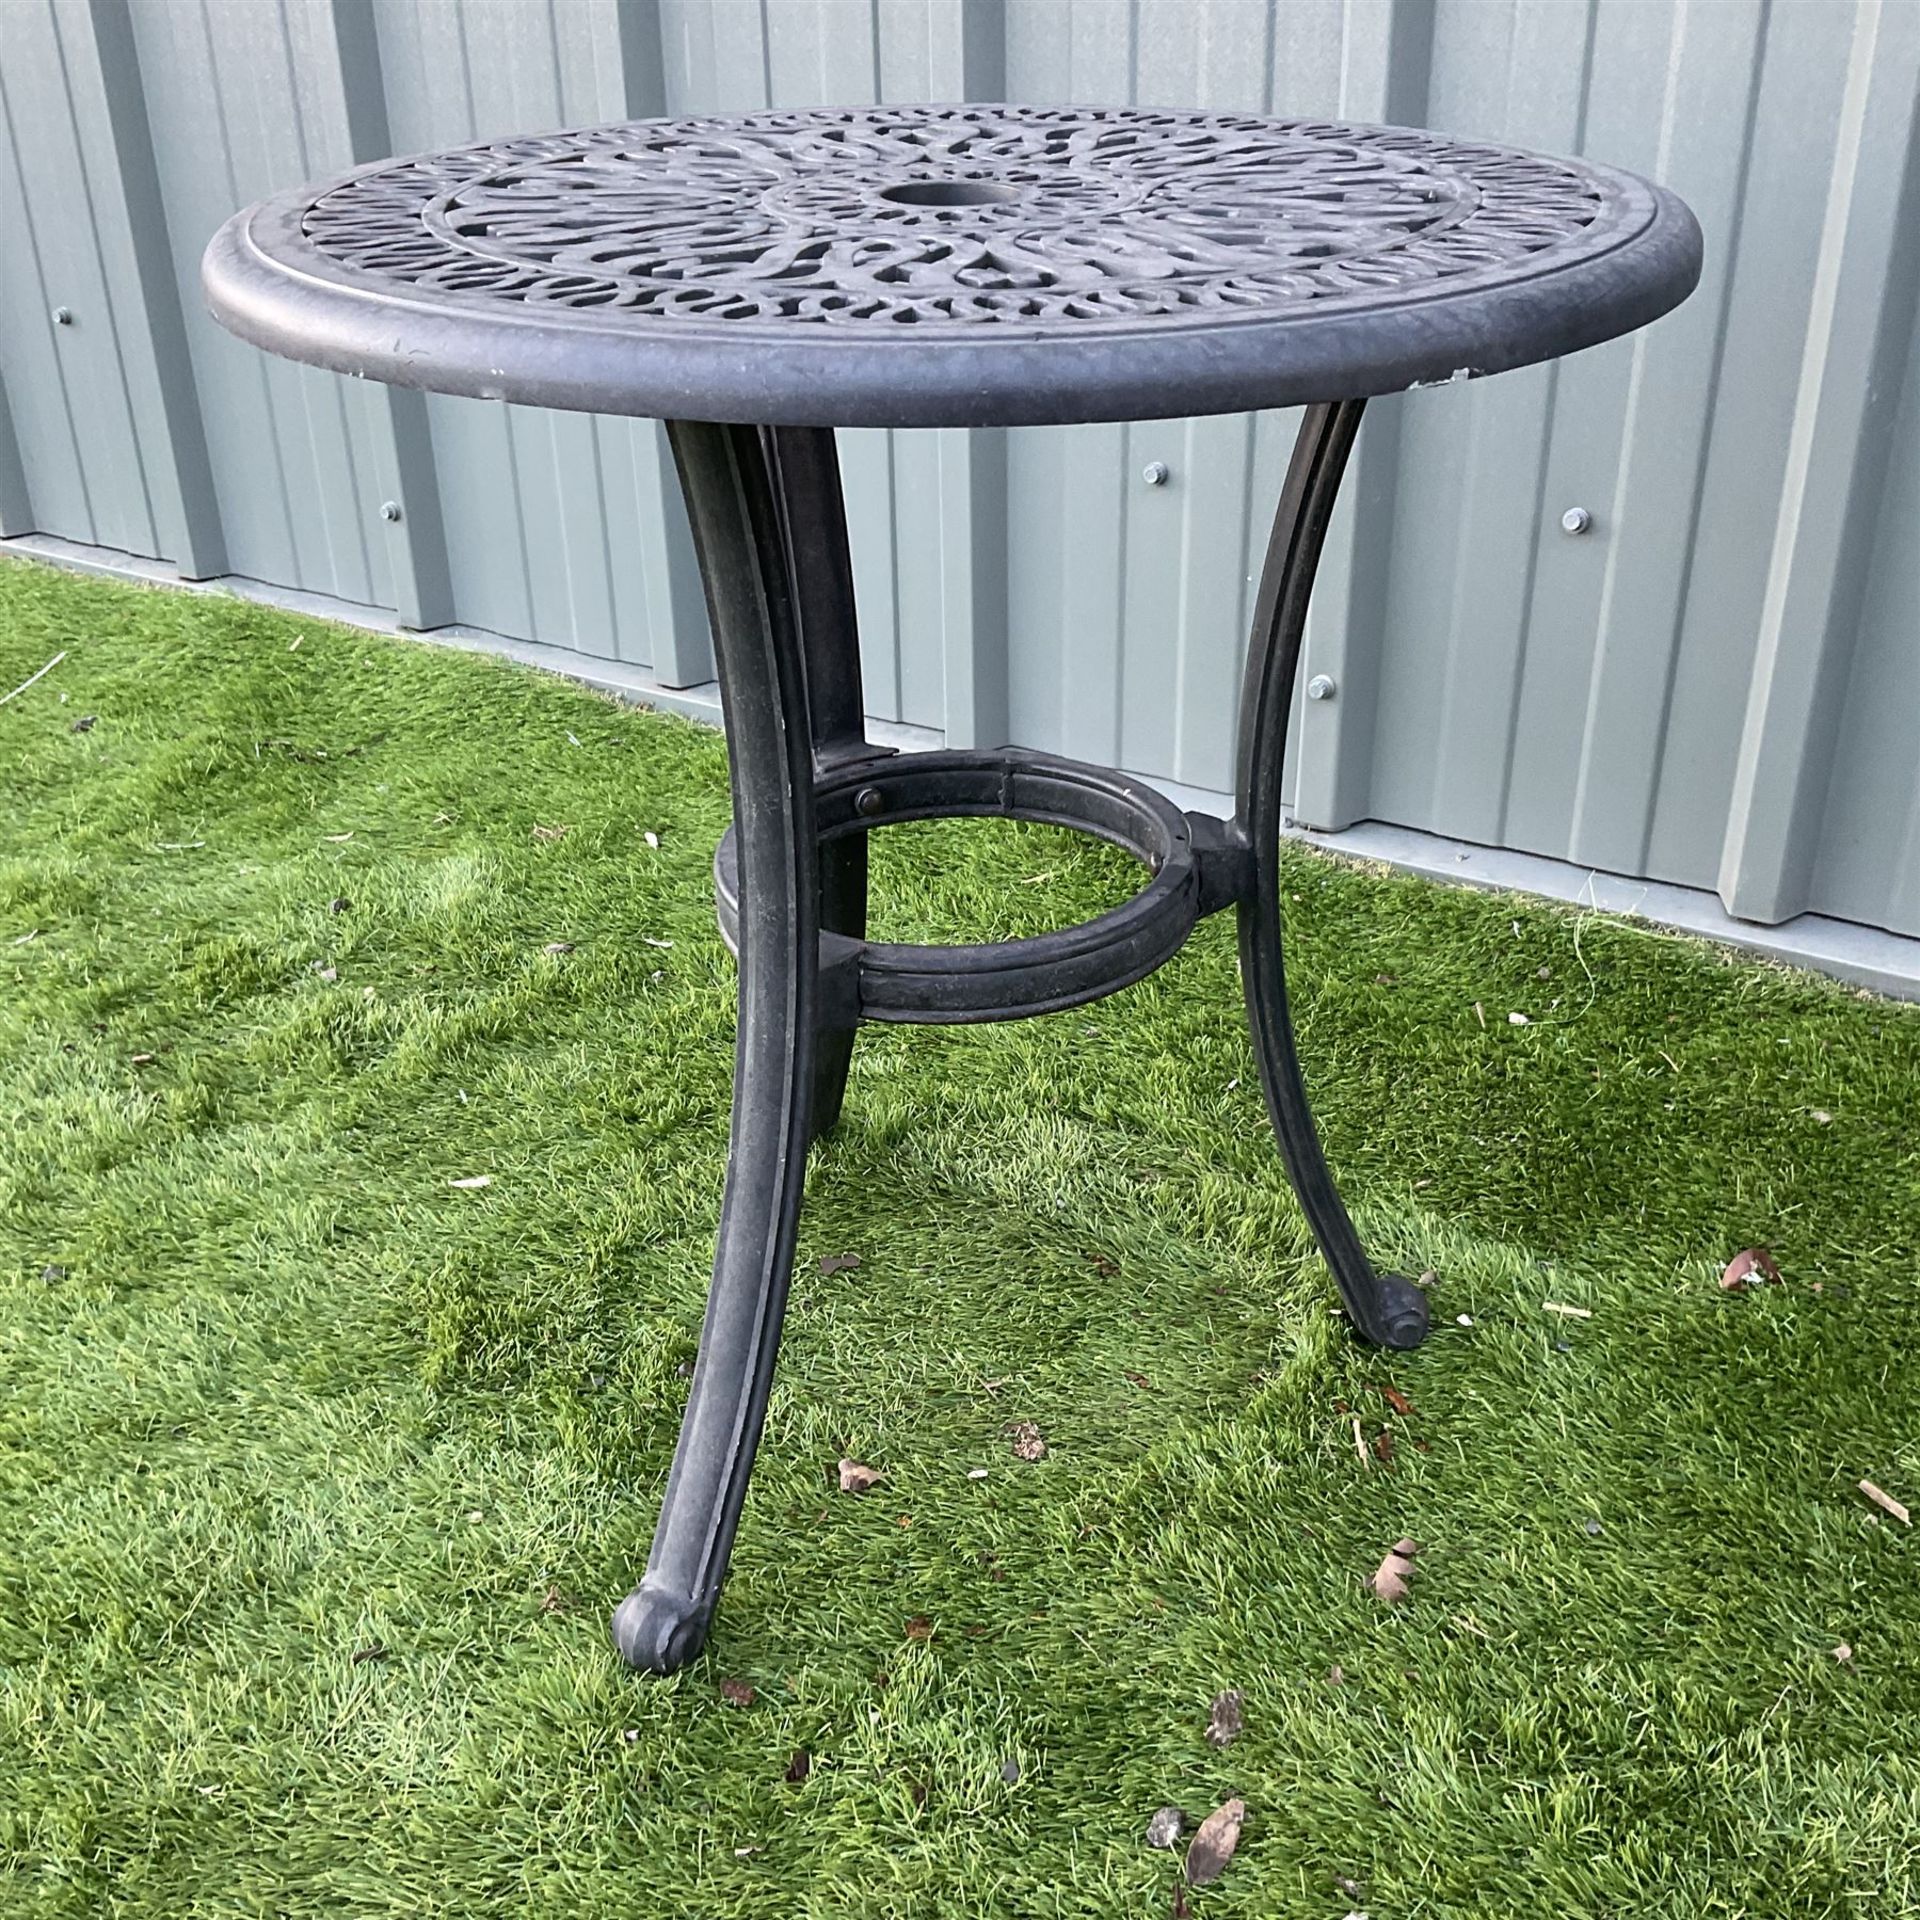 Cast aluminium circular garden table painted in black - Image 2 of 4